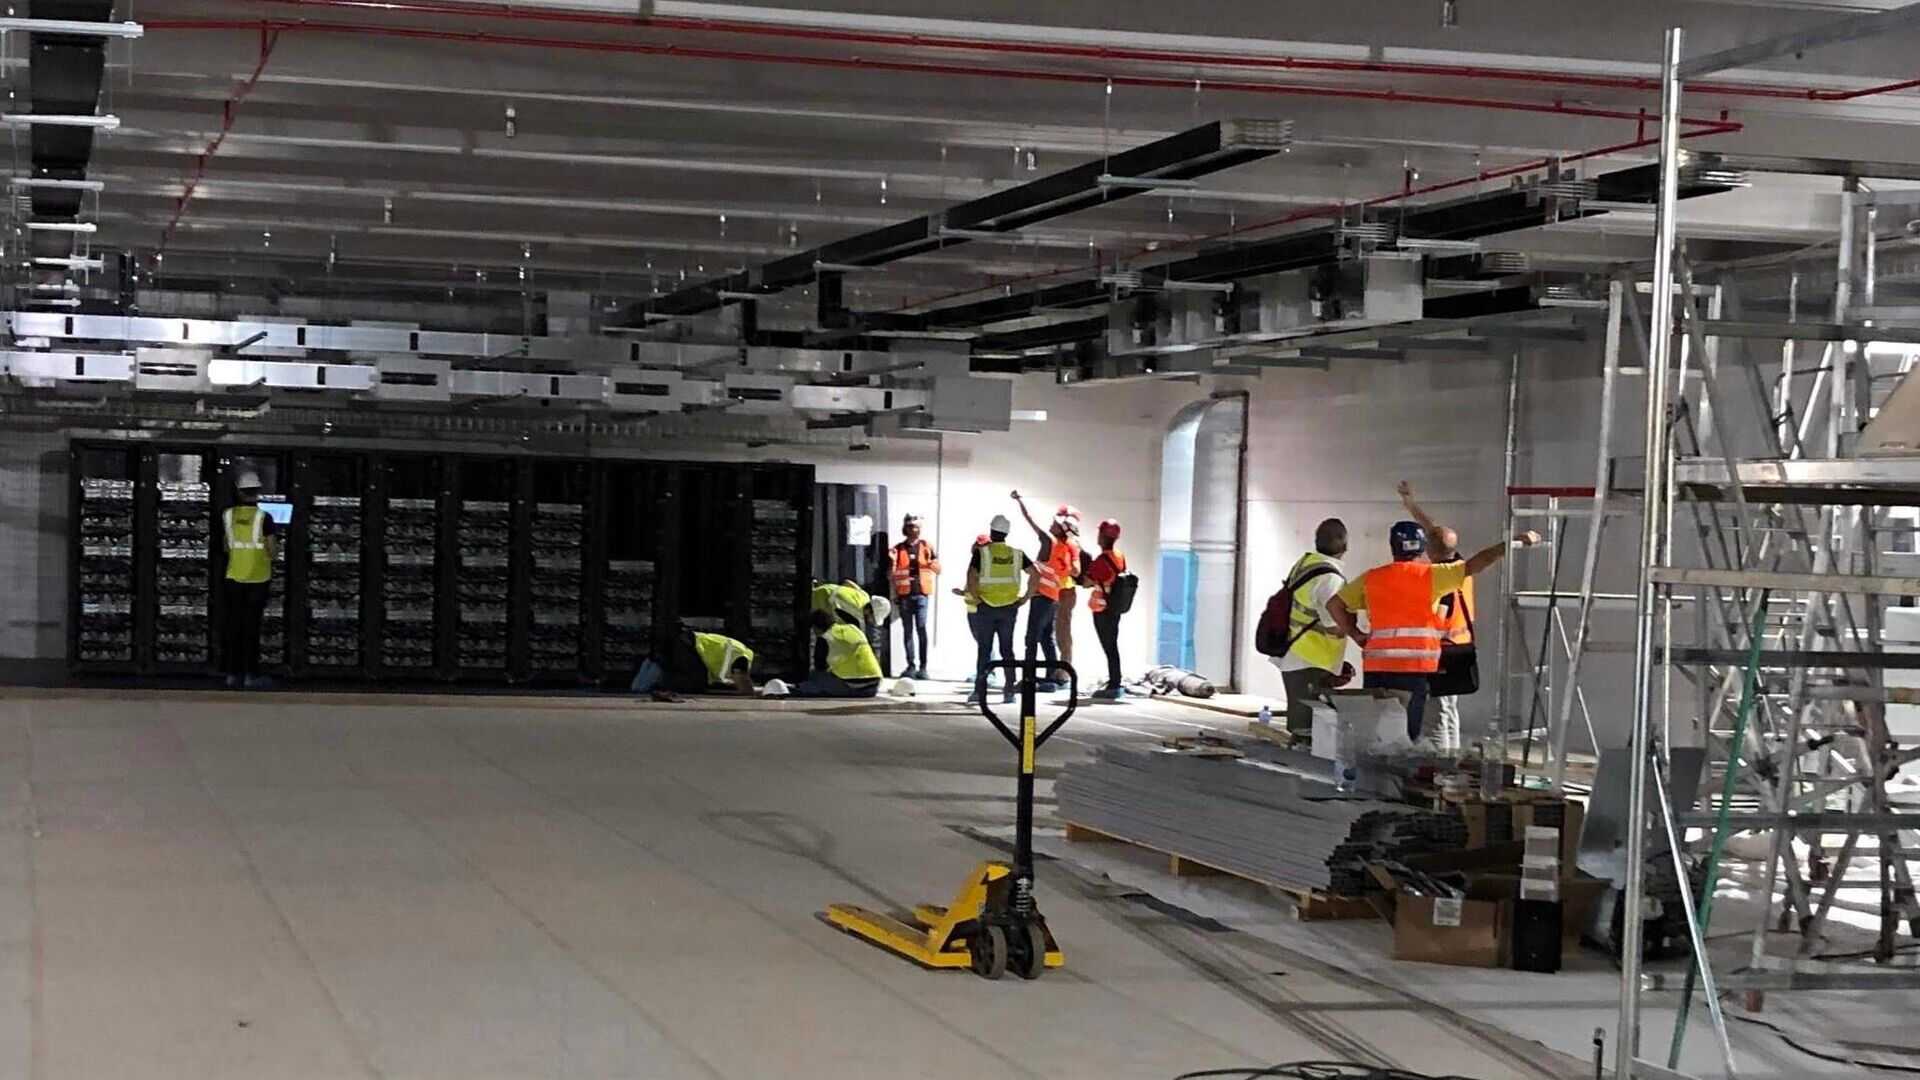 The Bologna "data center" for the Leonardo supercomputer